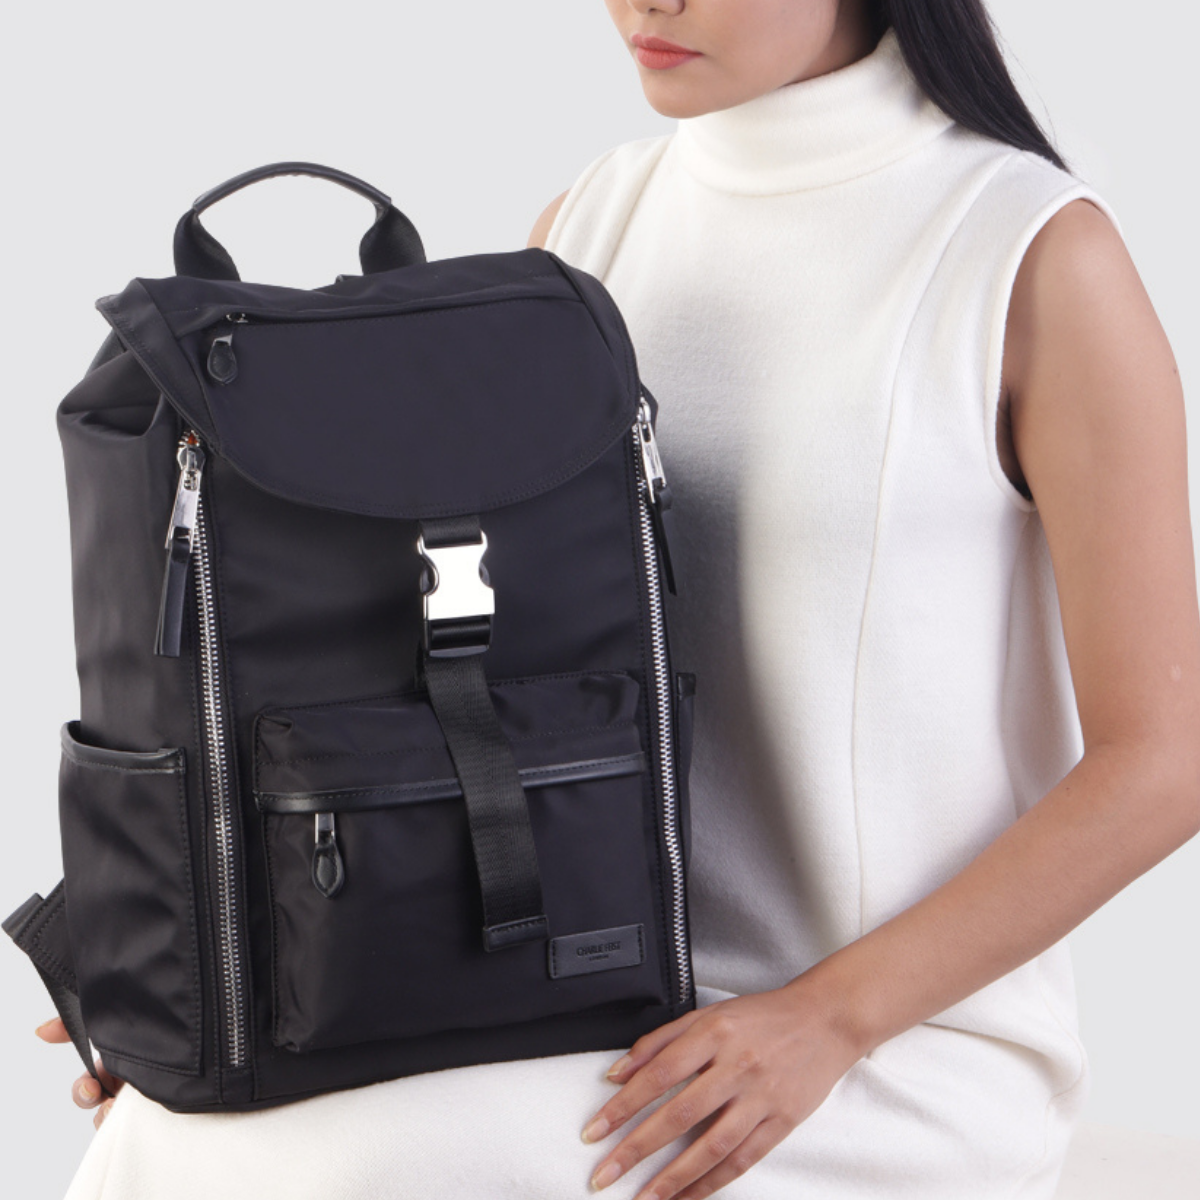 Kai 2.0 Black Backpack